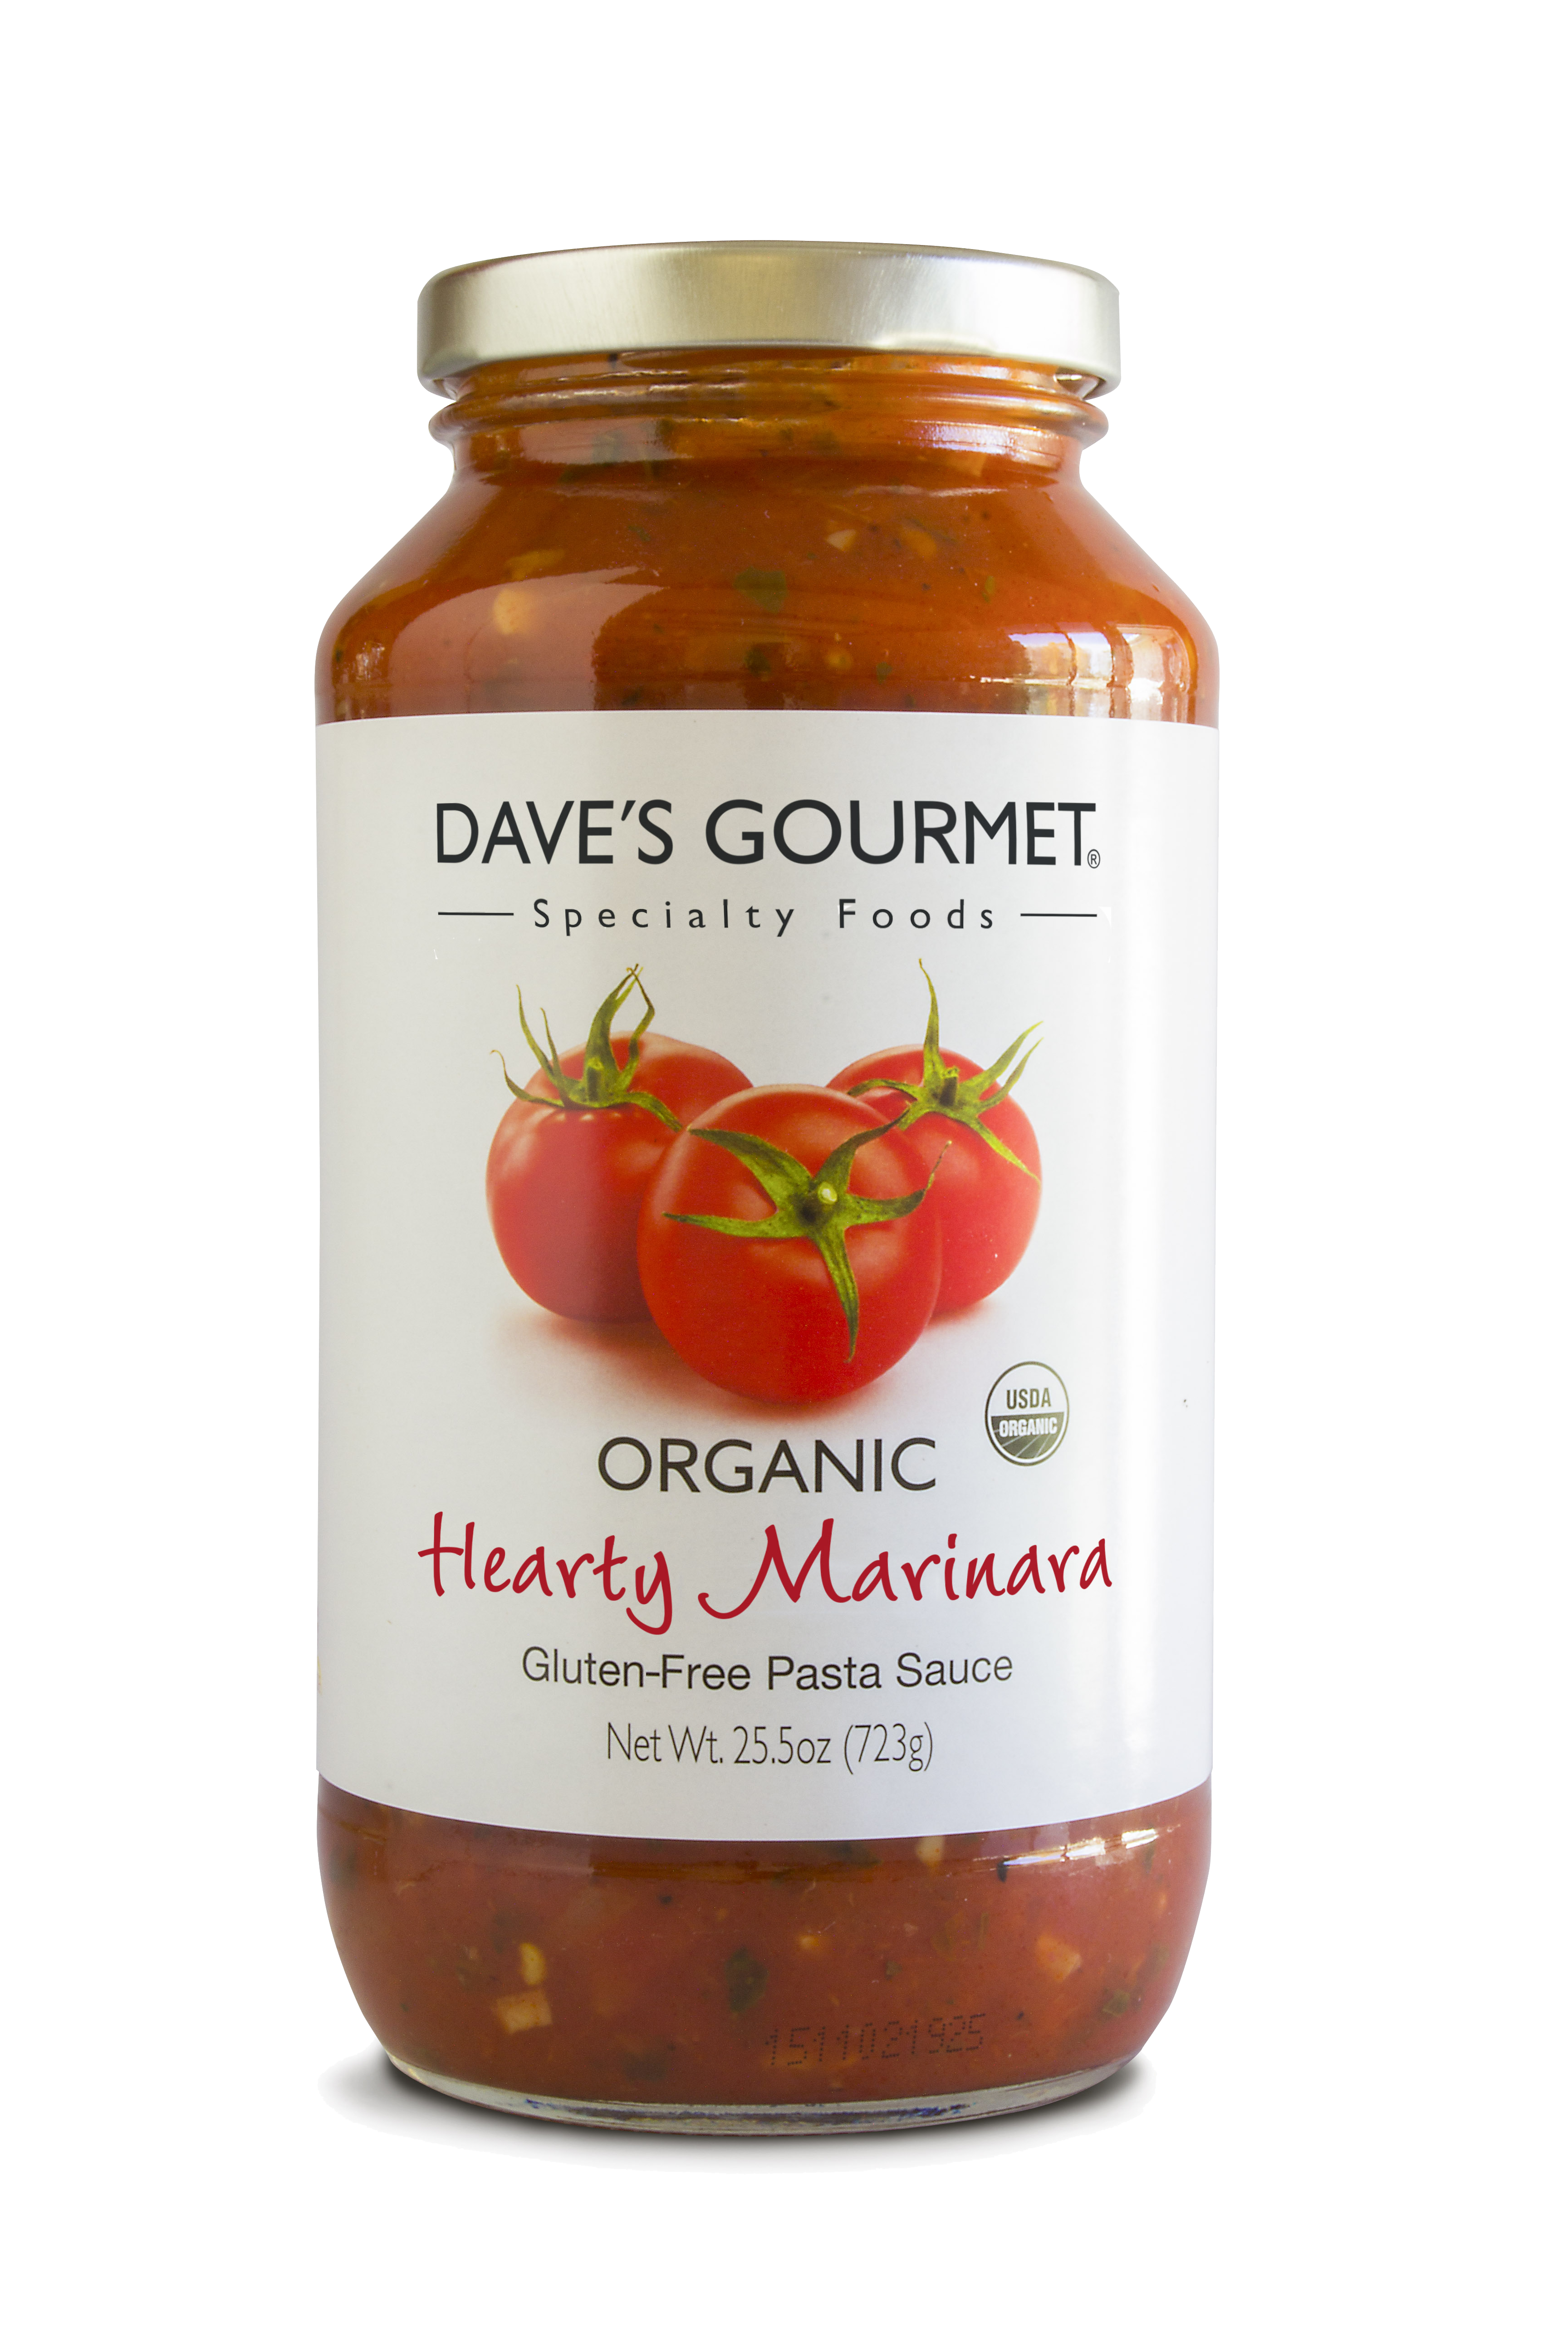 A jar of Dave's Gourmet Heart Marinara Organic Pasta Sauce Net Weight 25.5 oz